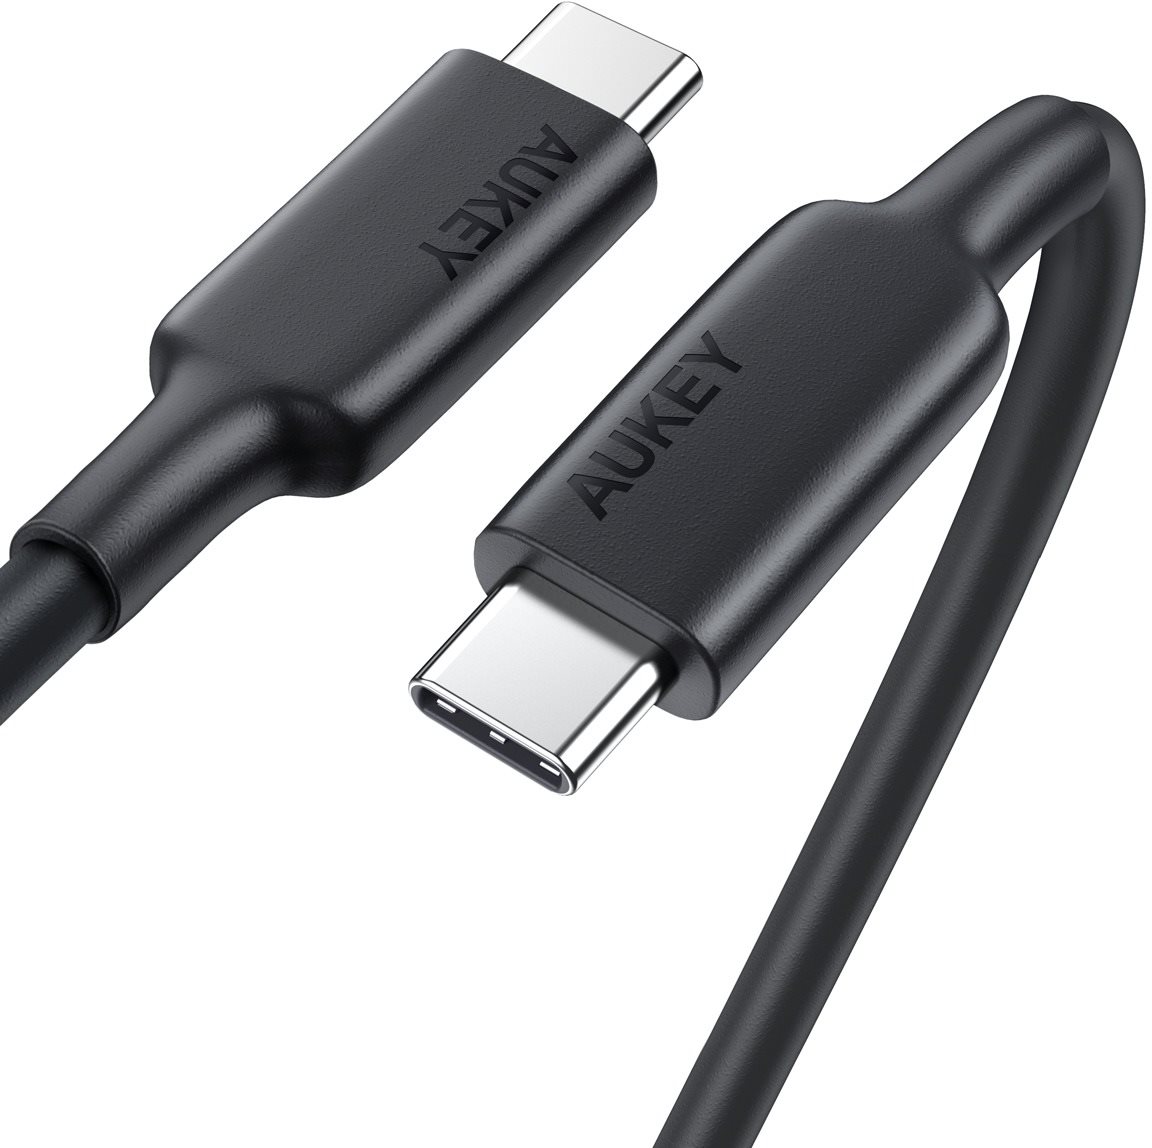 Adatkábel Aukey Impulse Series USB 3.1 Gen 2 USB-C Cable with E-mark chipset inside